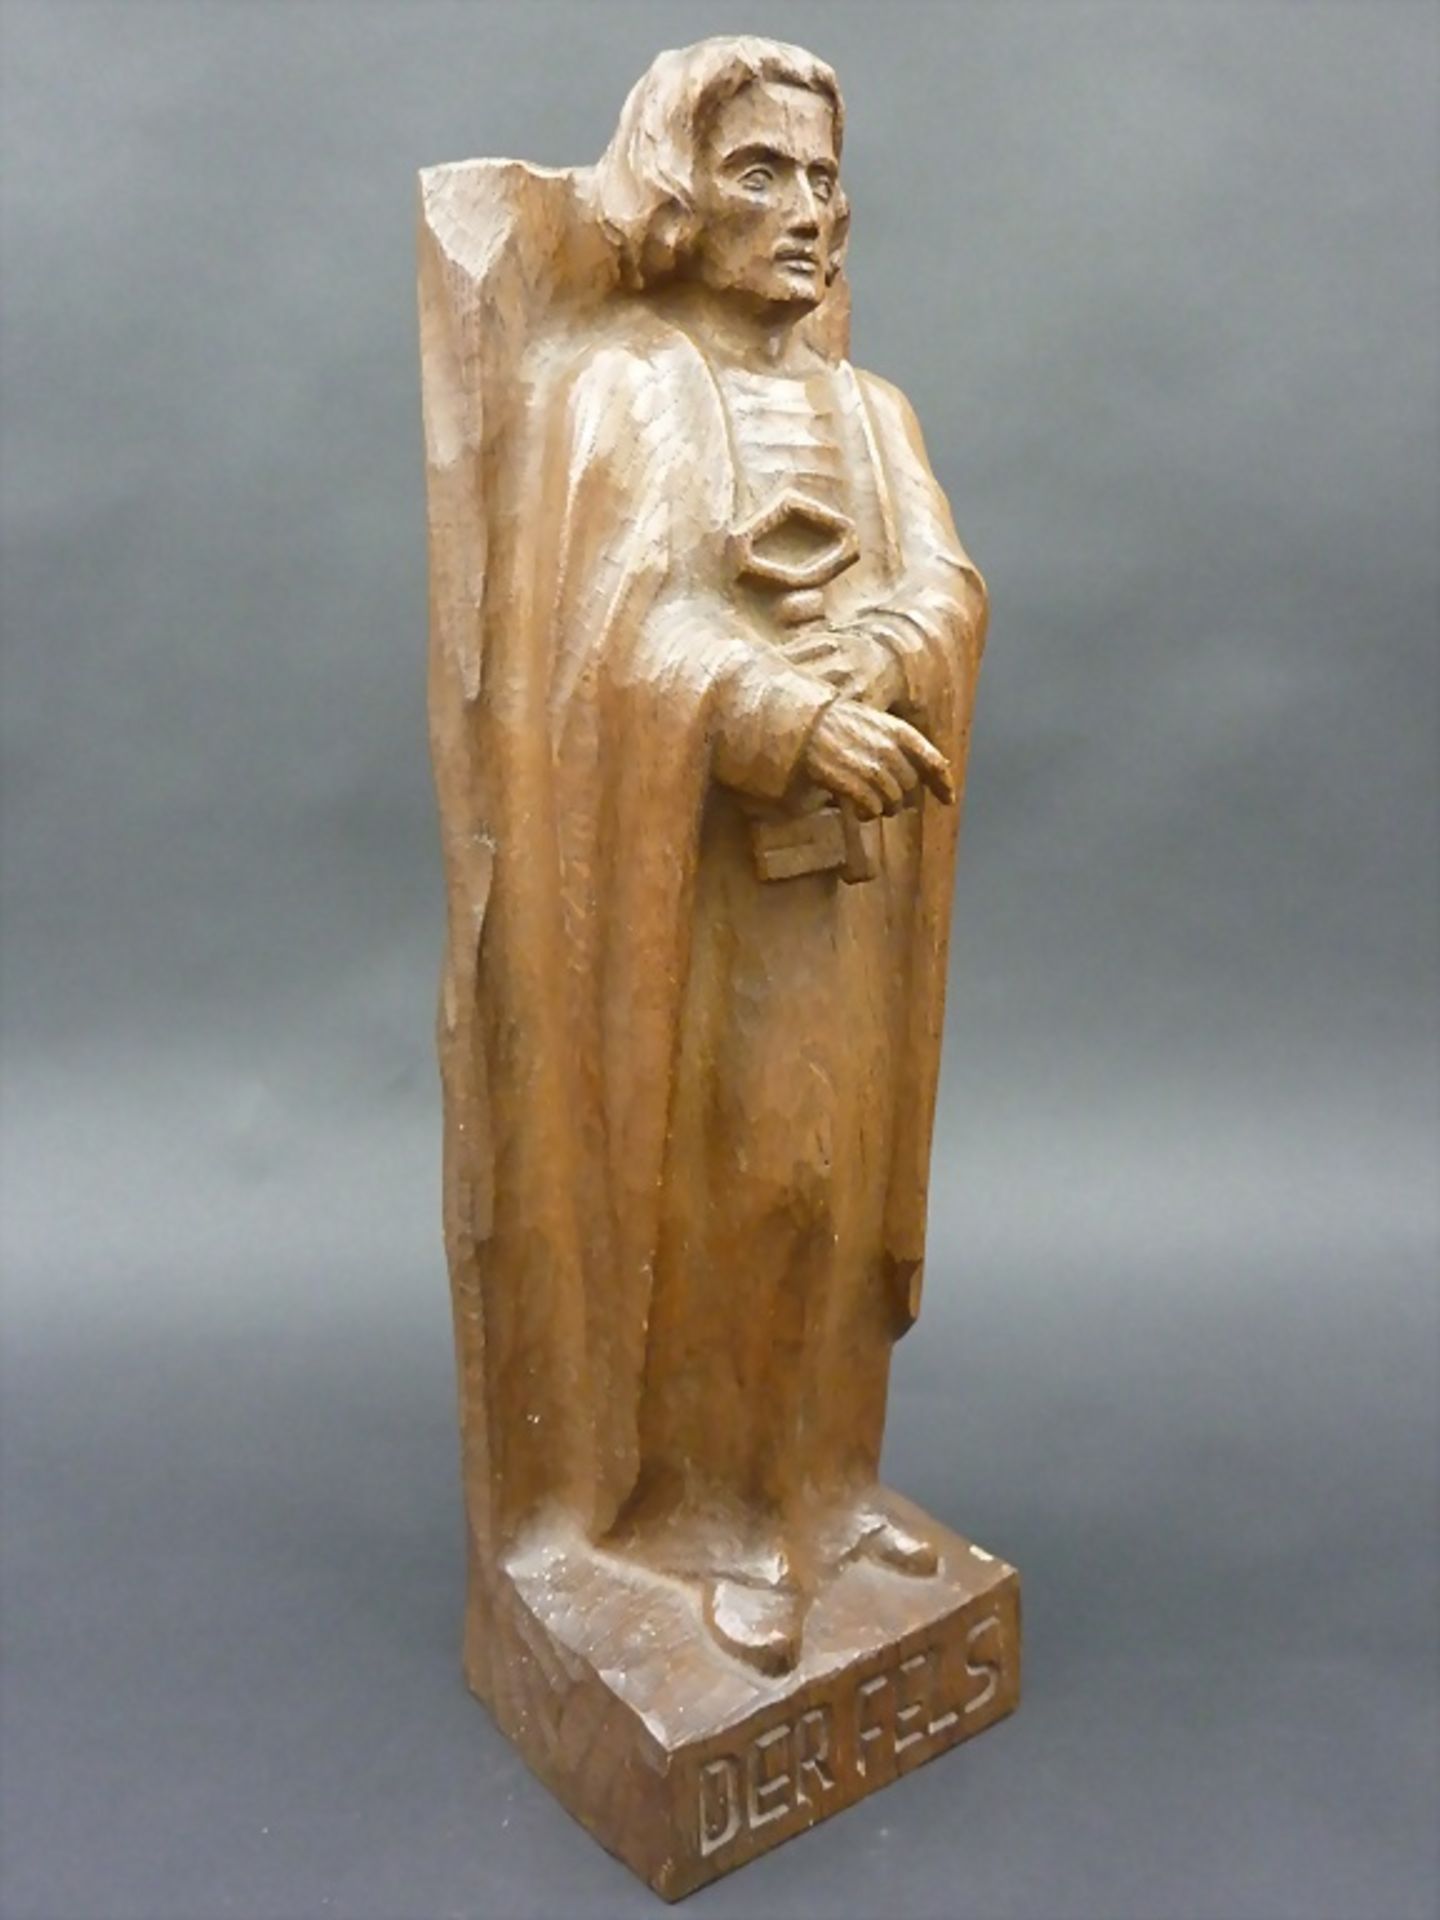 Holz-Skulptur 'Heiliger Apostel Petrus - Der Fels' / Wooden sculpture 'Holy Apostle Peter - ... - Image 4 of 12